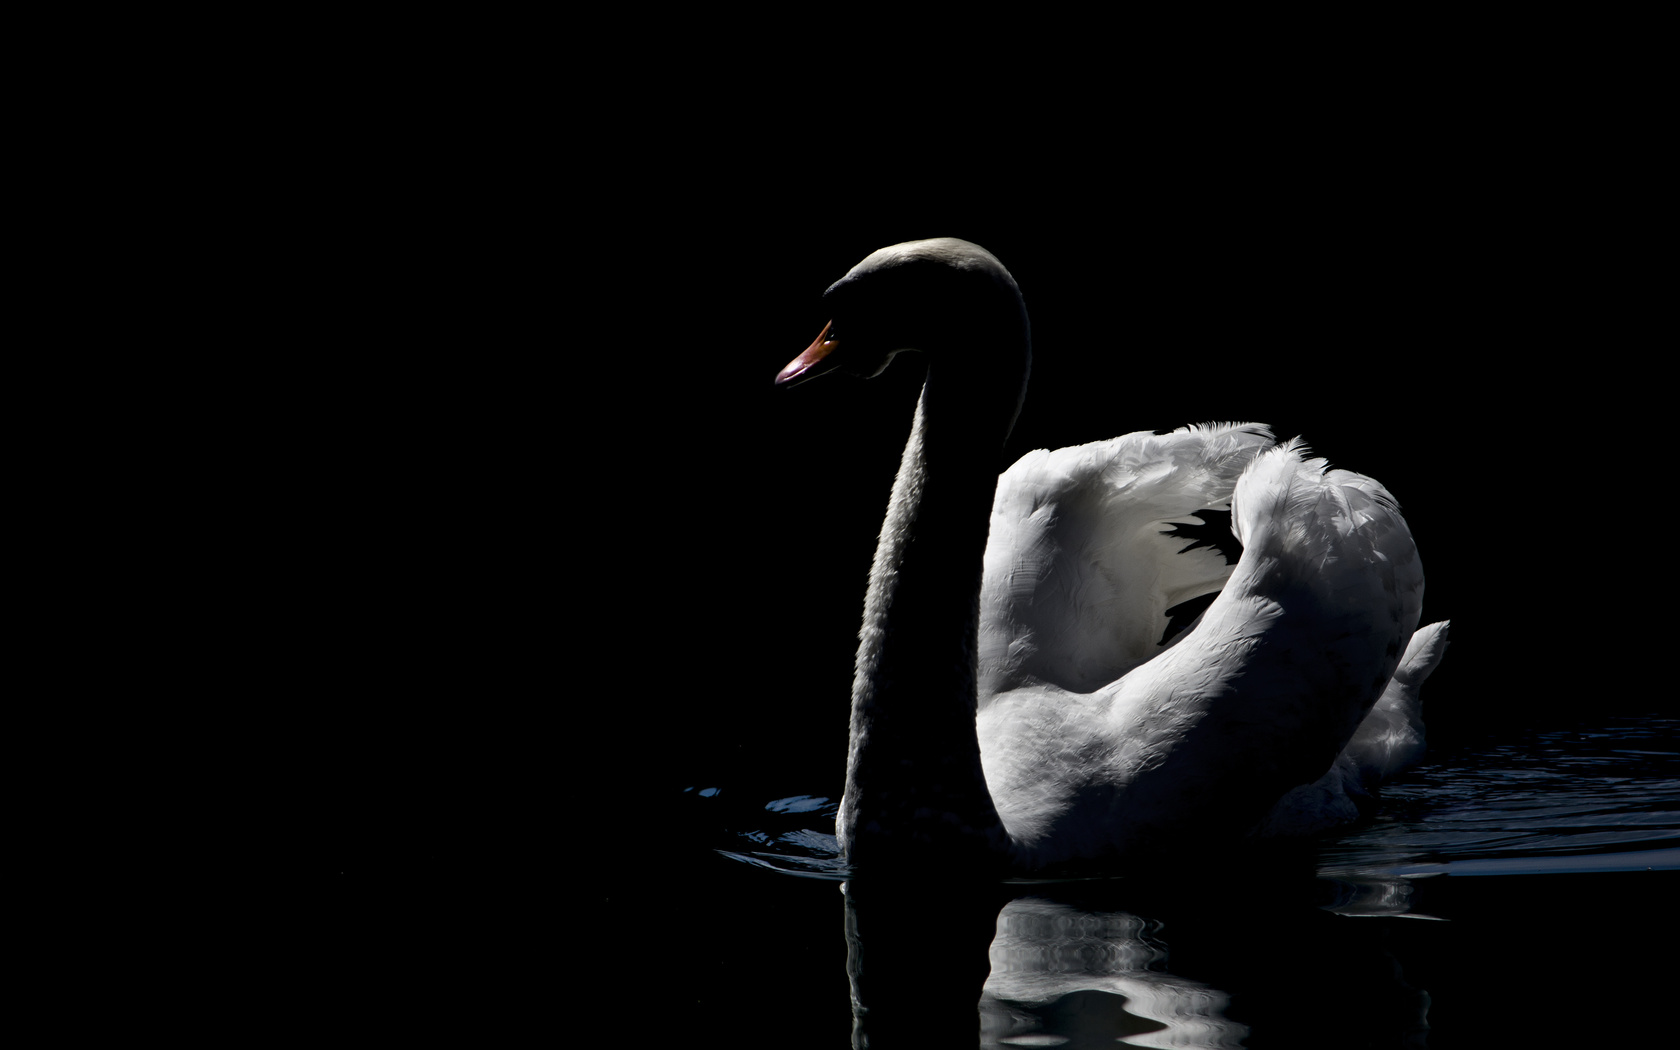 mmaglica, photo, mmaglica photo, dark, lake, swan, beautiful, peaceful